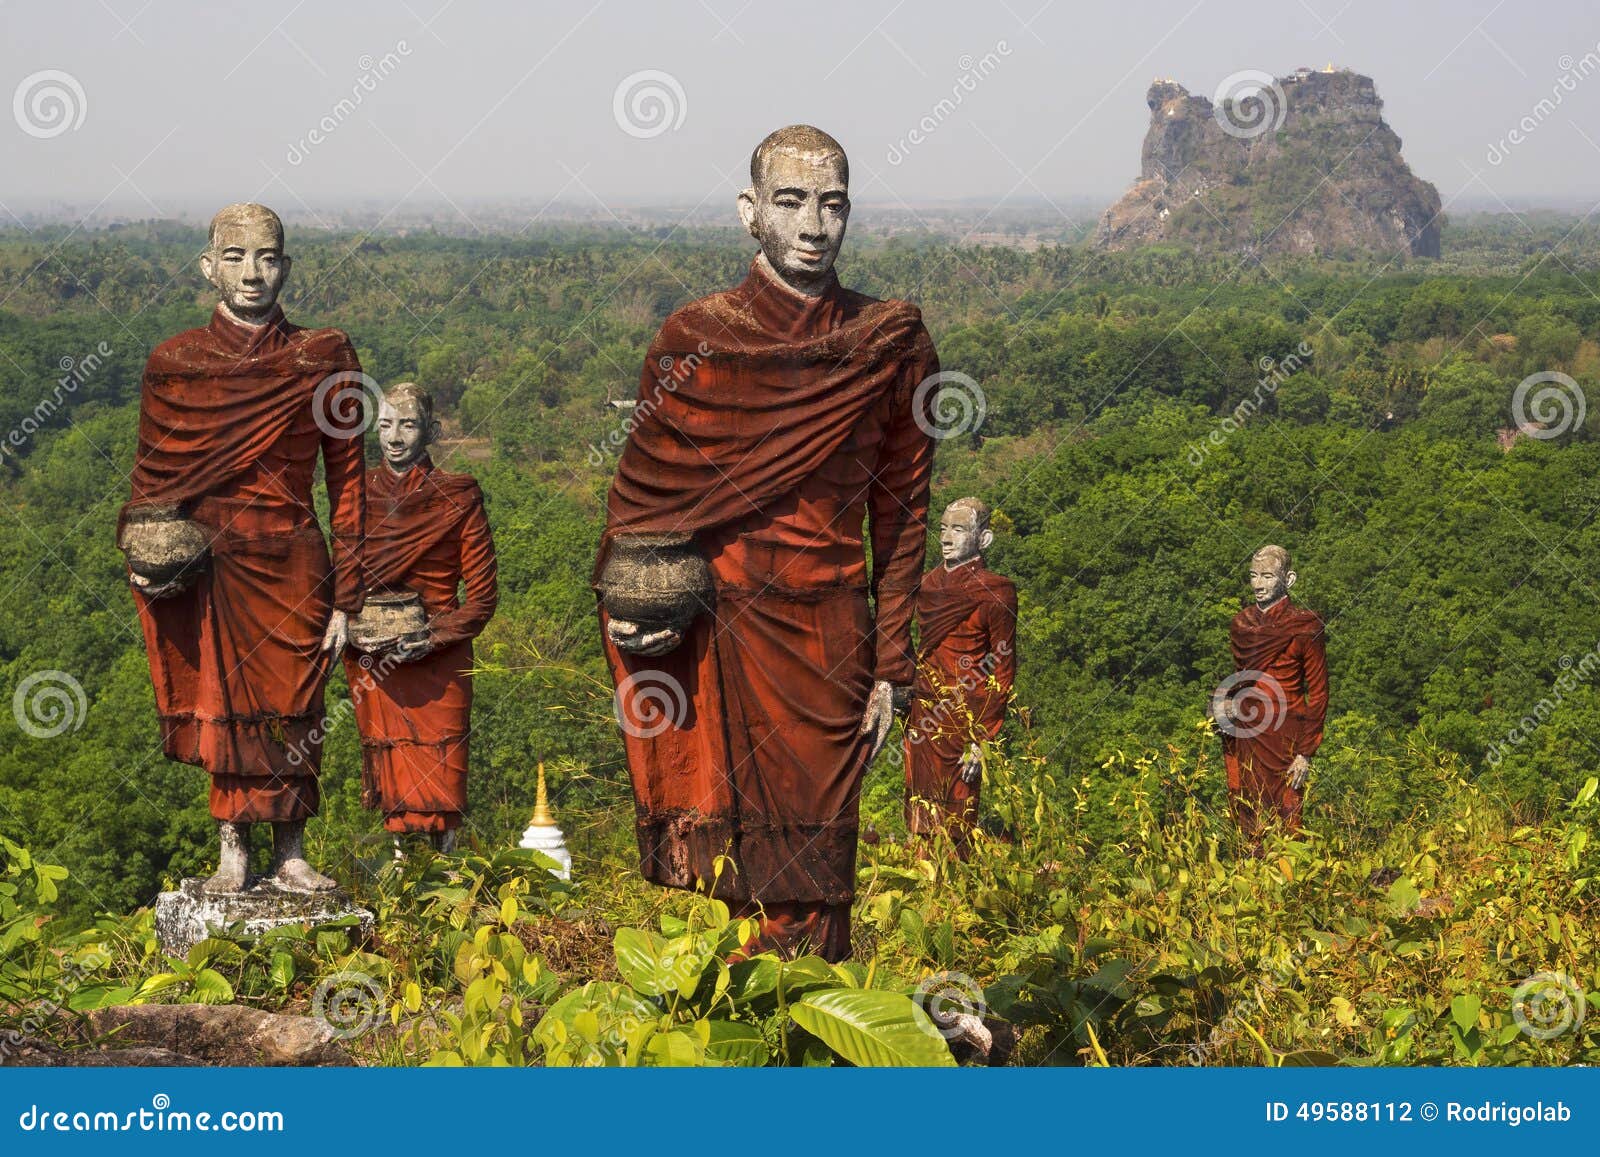 statues of buddhist monks in mawlamyine, myanmar